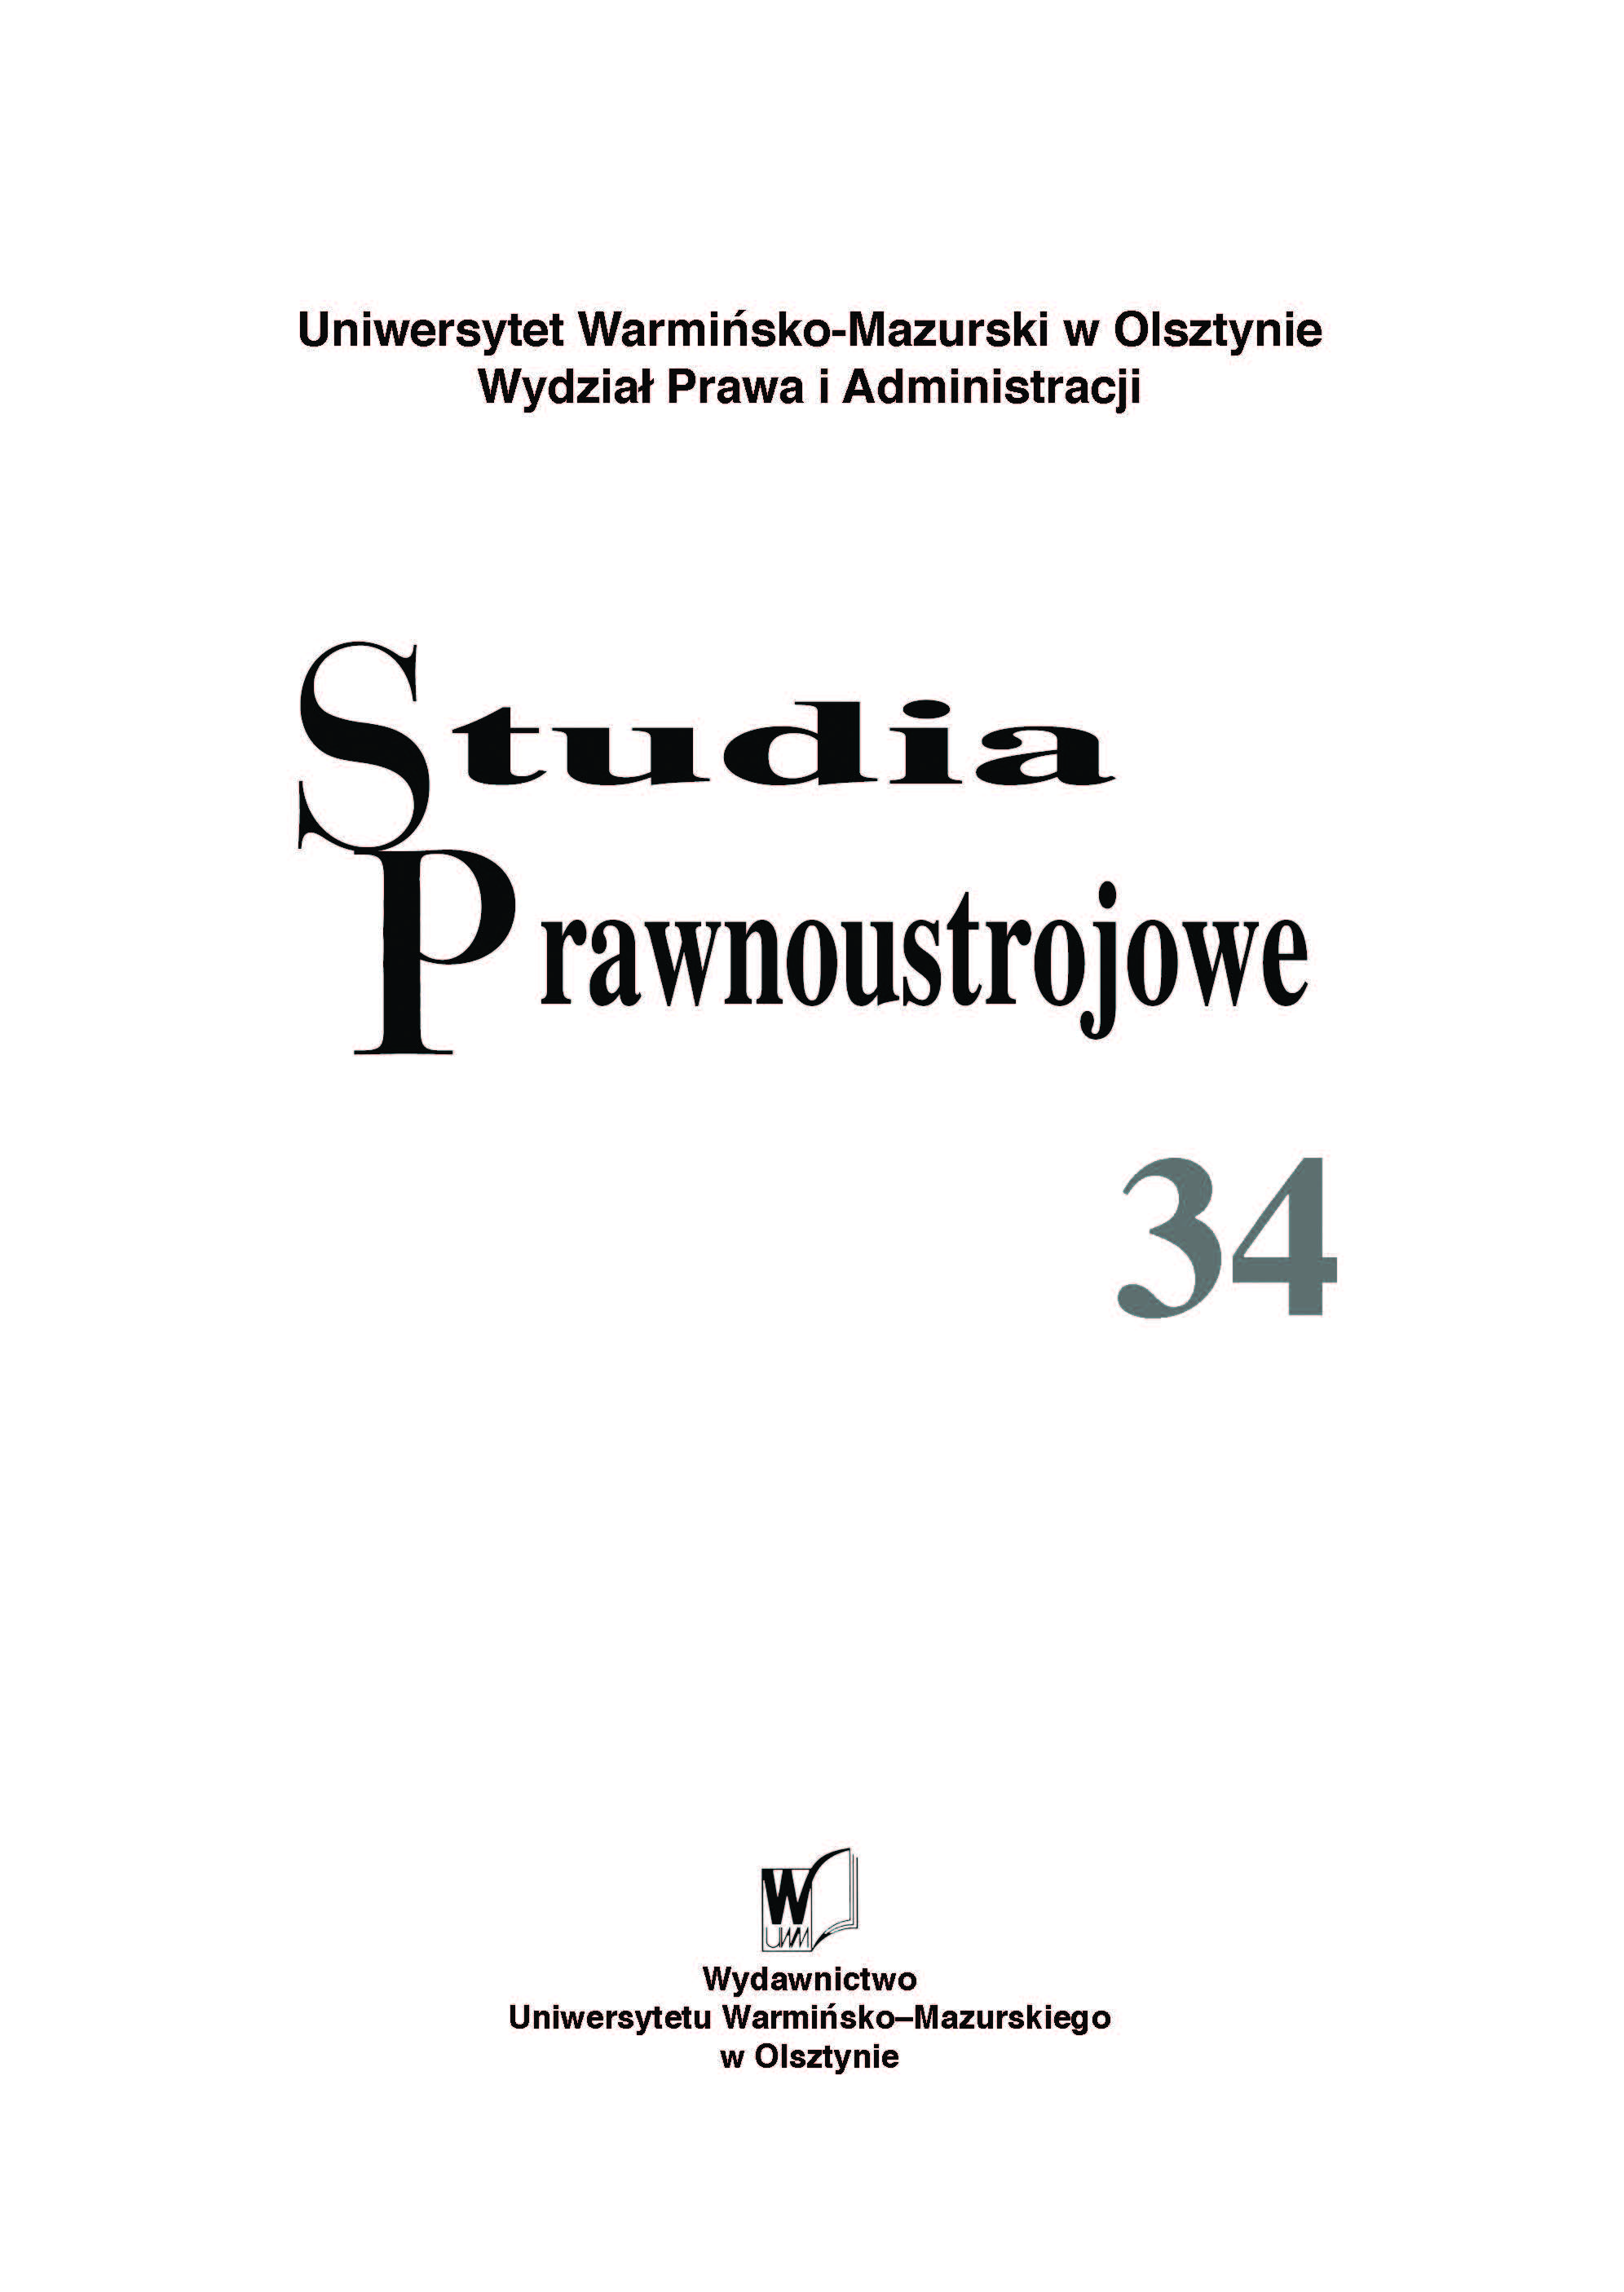 Retired professor University of Warmia and Mazury in Olsztyn Wincenty Bednarek (1936-2016) Cover Image